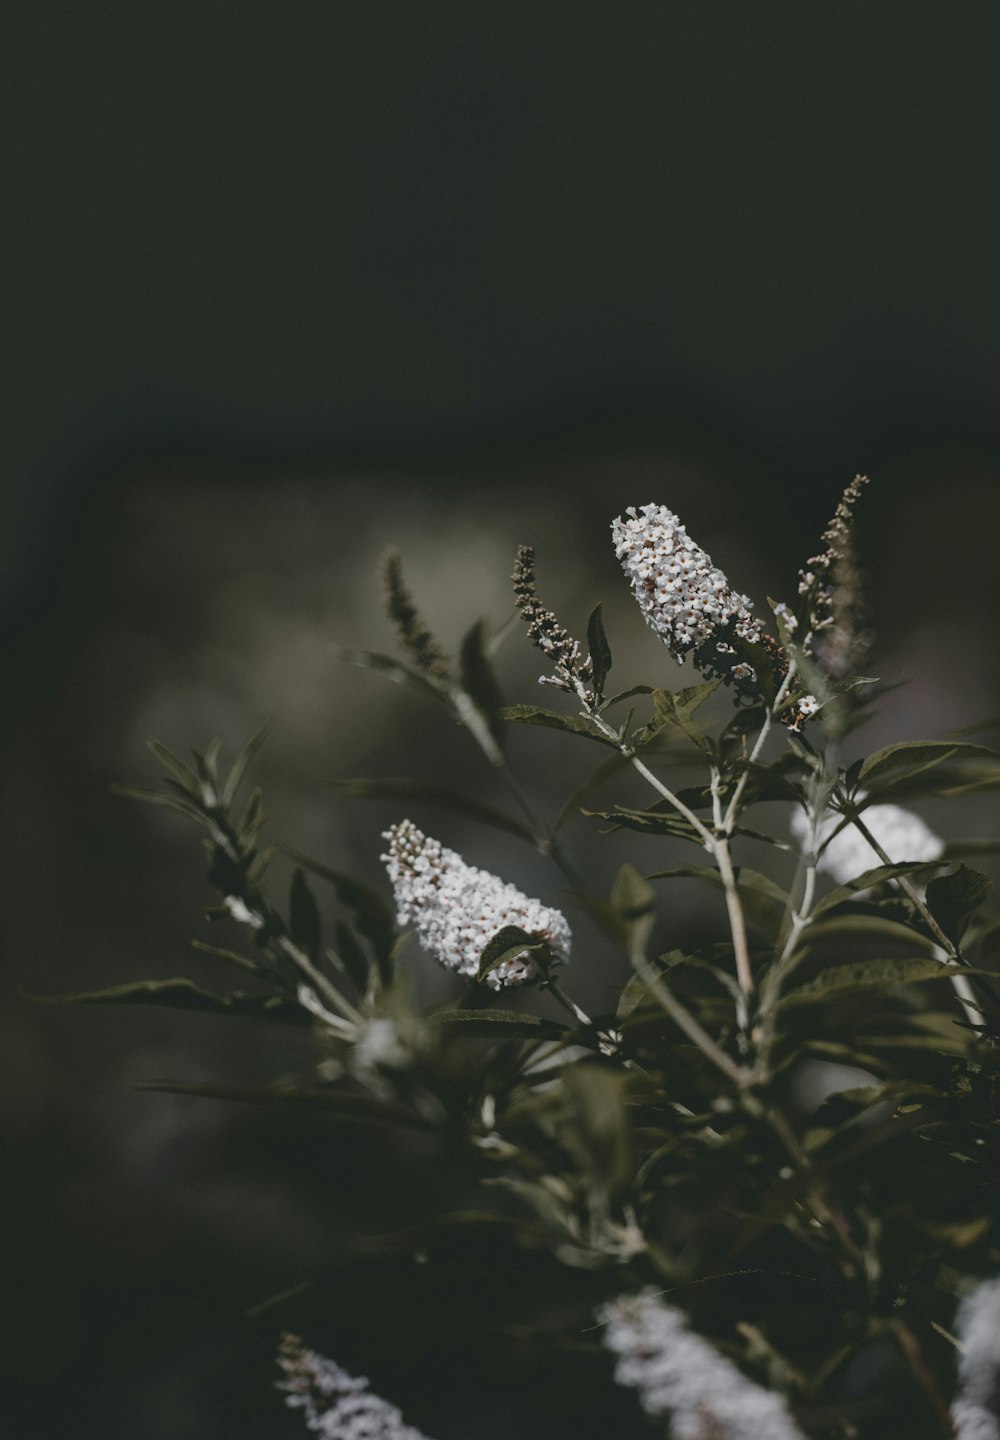 flores brancas na fotografia da lente de foco raso